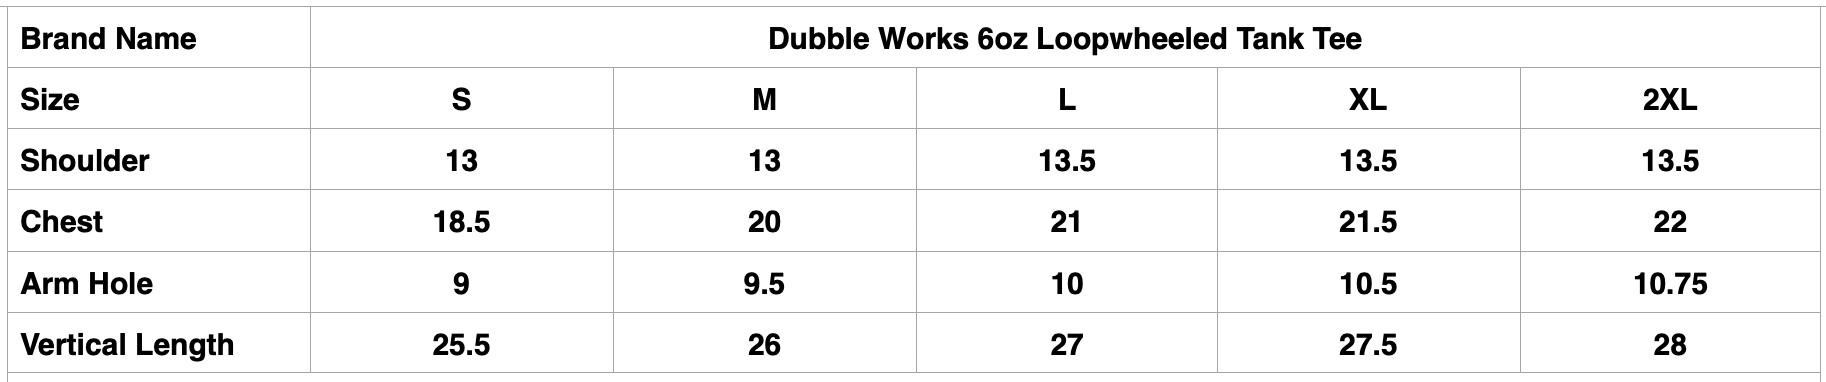 Dubble Works 6oz Loopwheeled Tank Tee (Sax)